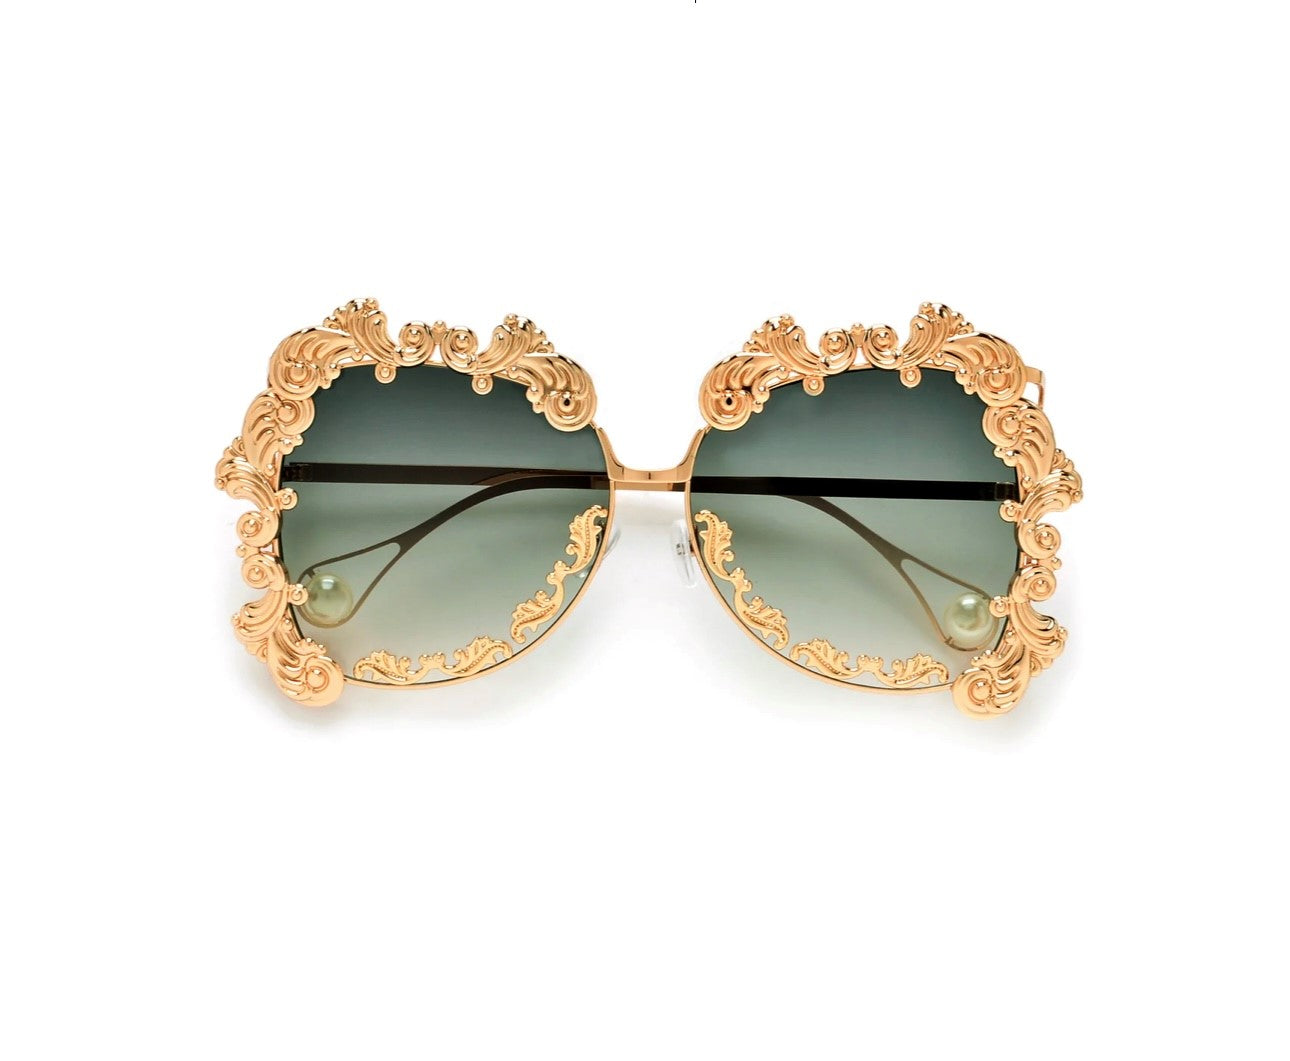 Elaborate Baroque Design Pearl Tip Temple Glasses